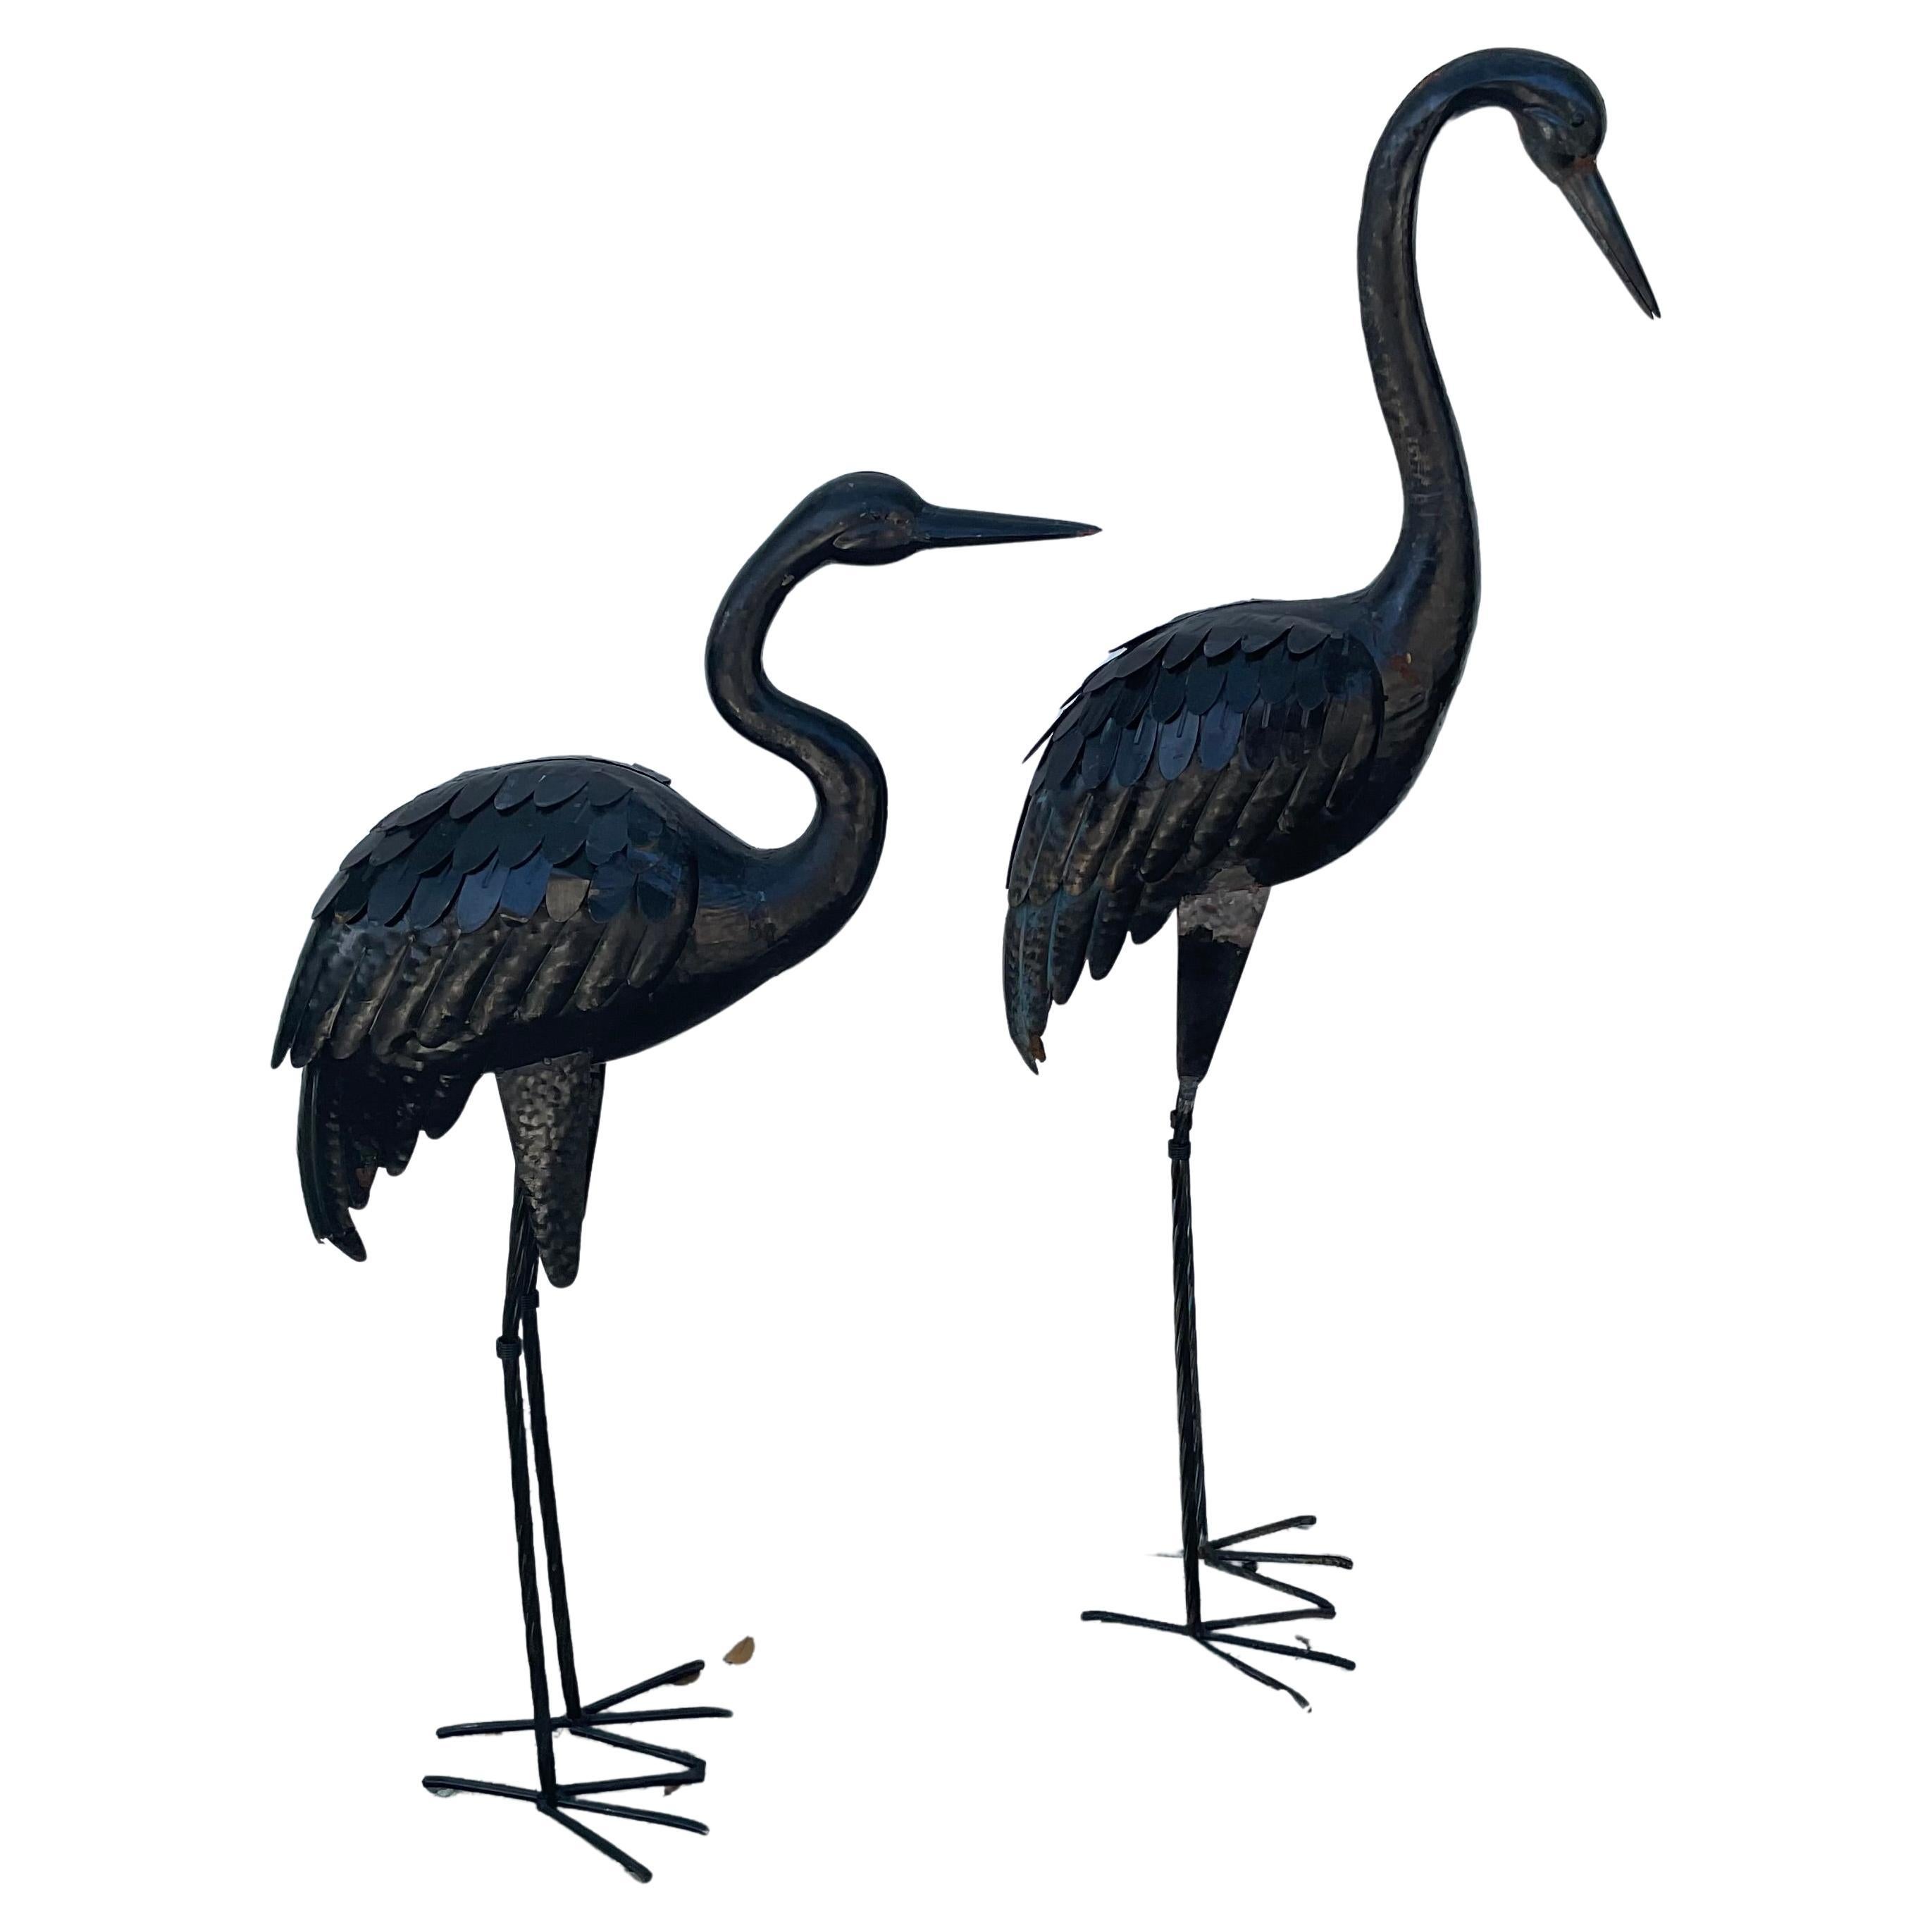 Pair of Black Metal Standing Cranes